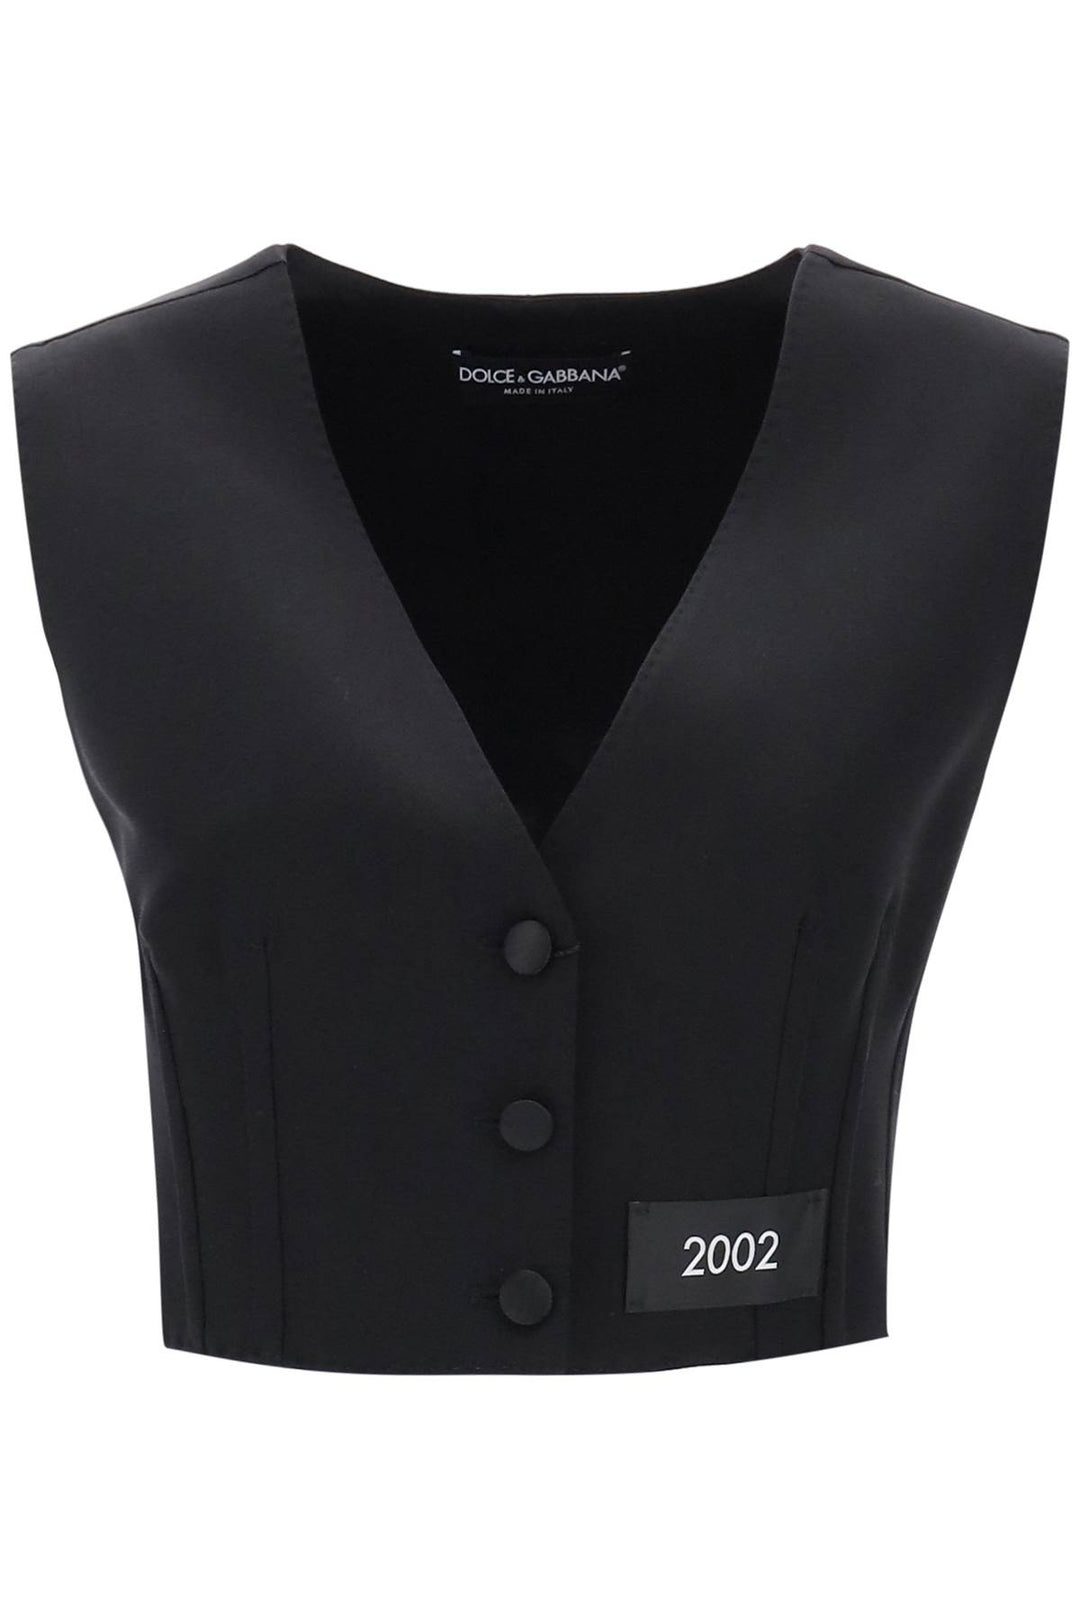 Dolce & Gabbana Re Edition Tailoring Waistcoat   Nero